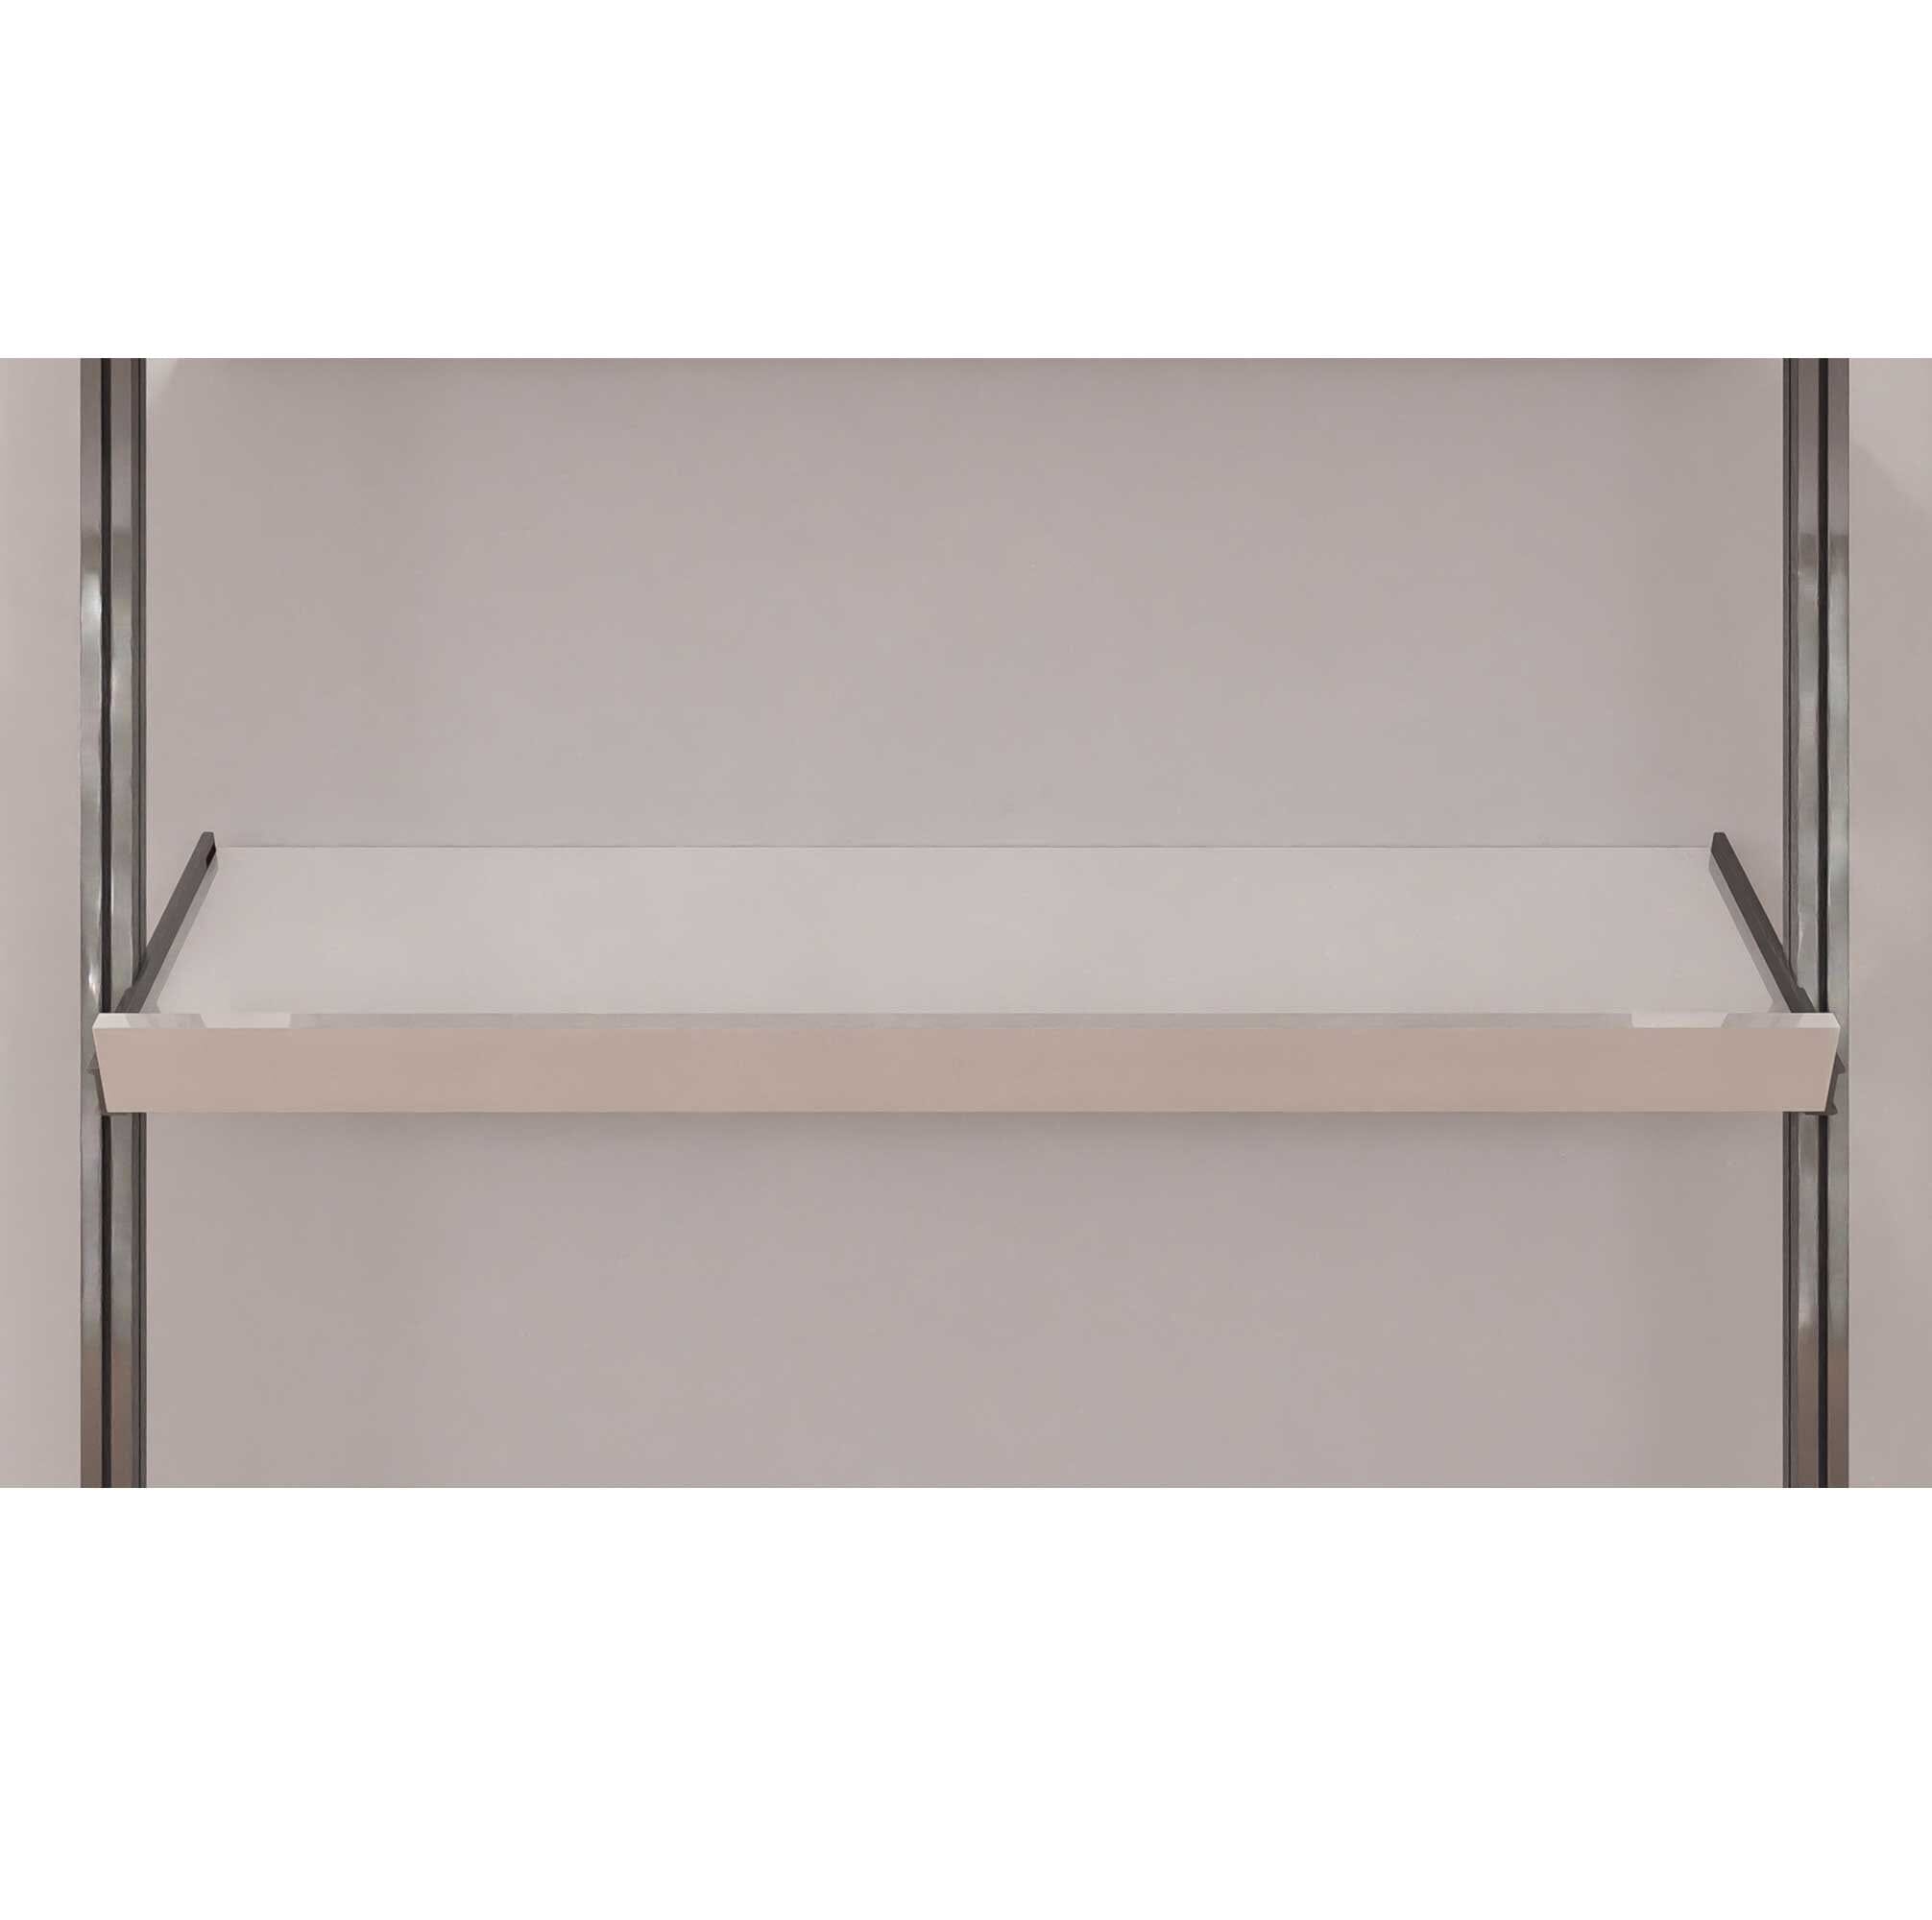 Aluminum Display Shelf - Angled